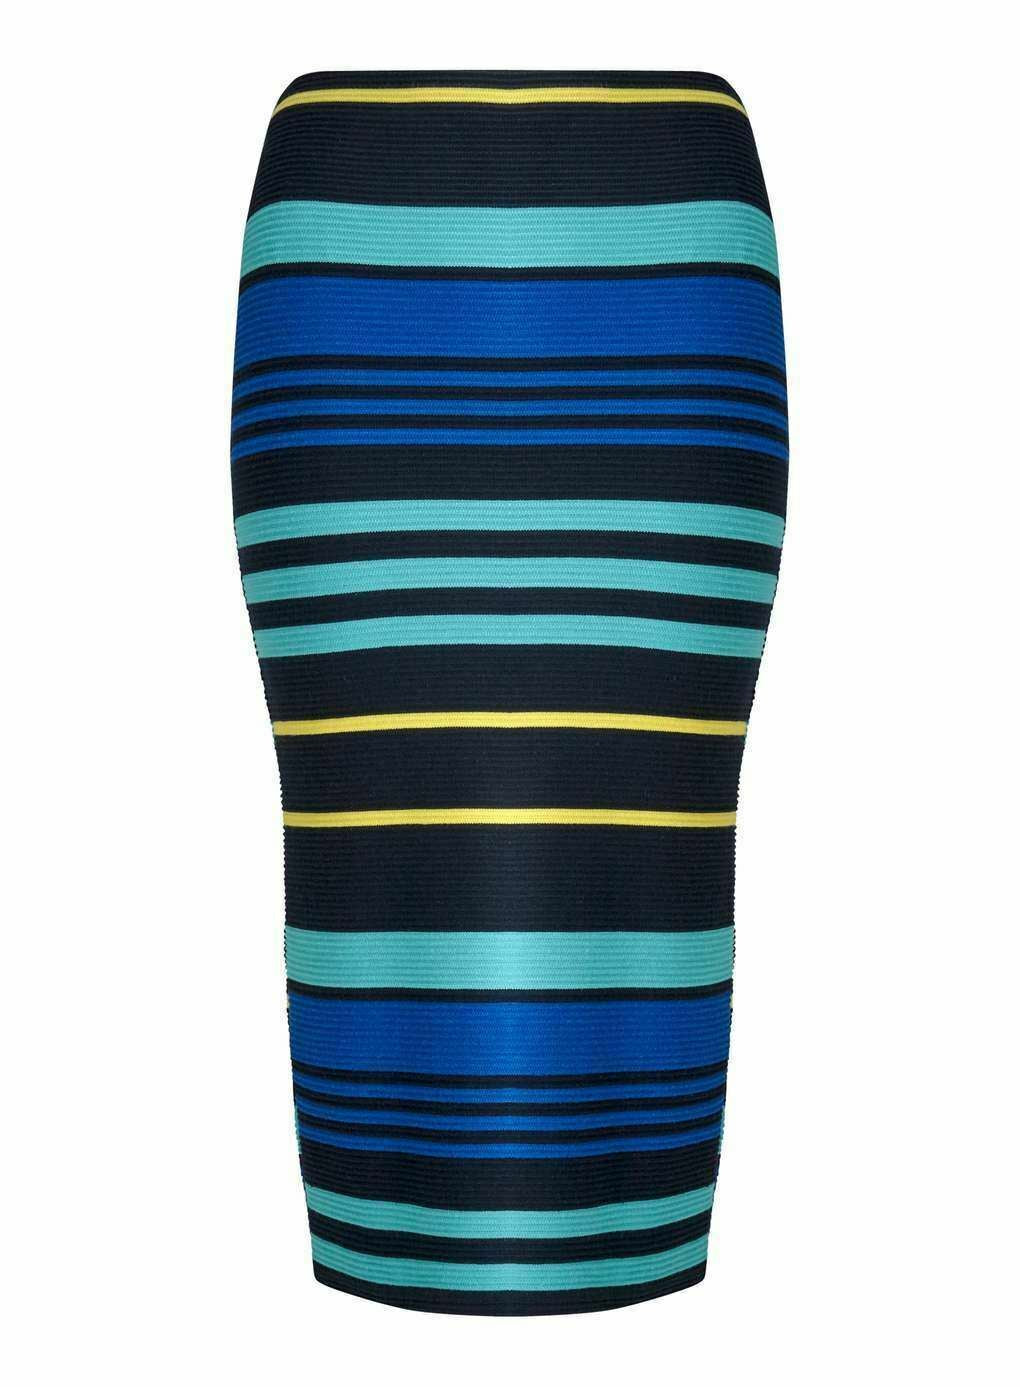 MISS SELFRIDGE Women's Blue Stripe Rib Pencil Midi Skirt, size UK 4